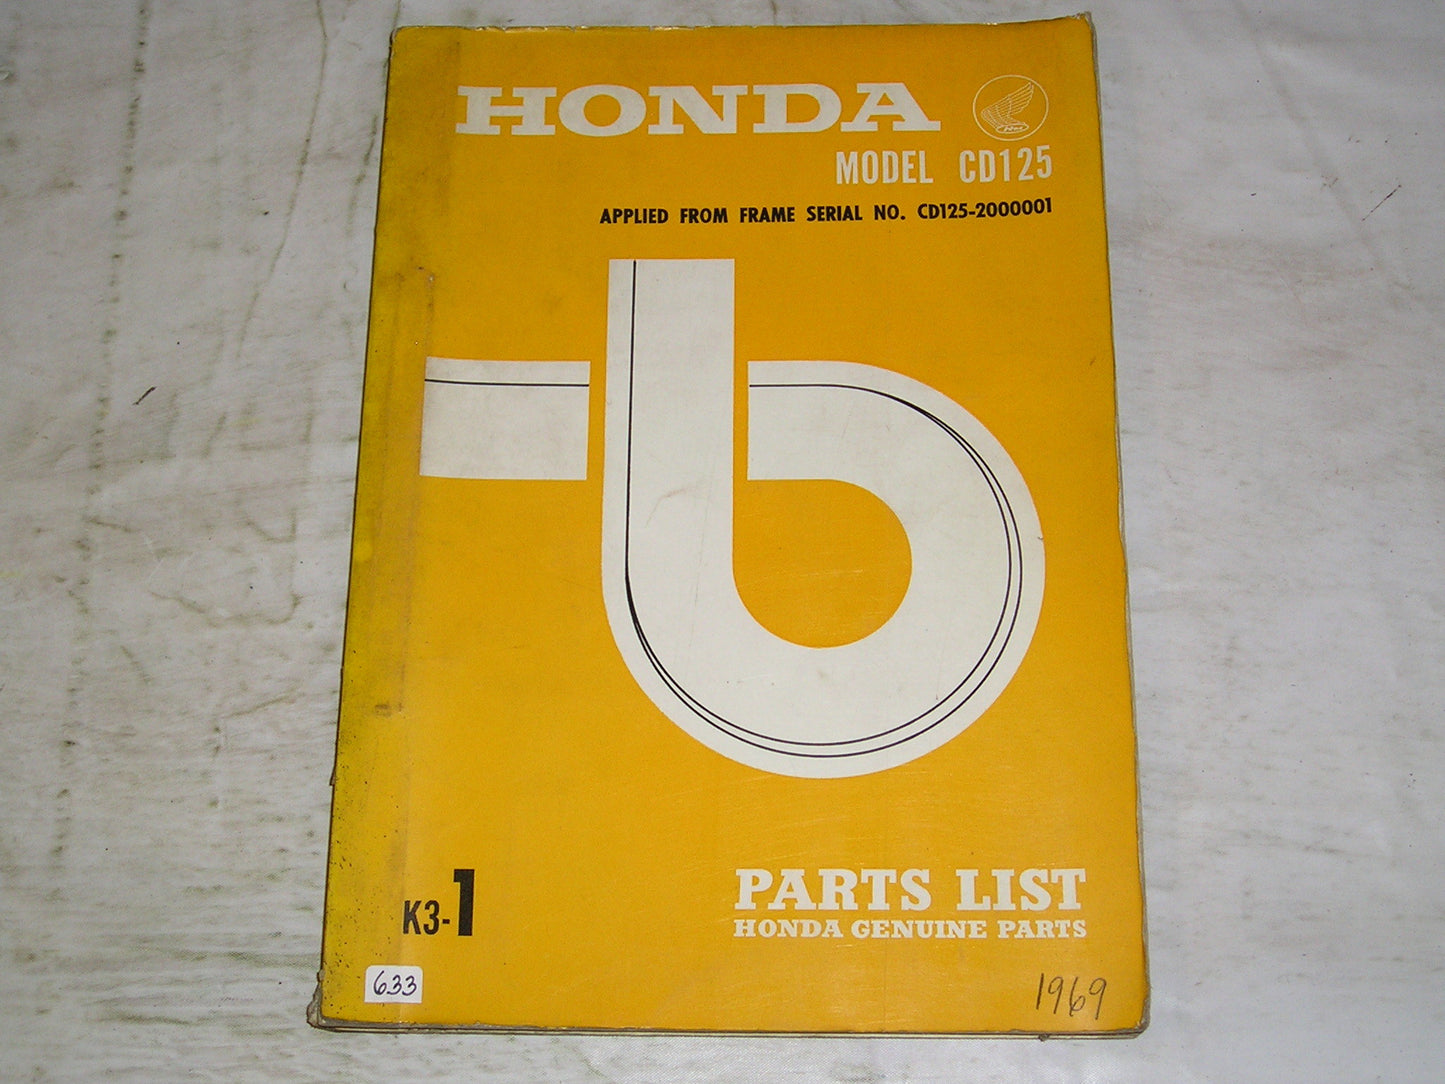 HONDA 125  Model  CD125 K3  1969  Factory Parts List  #633